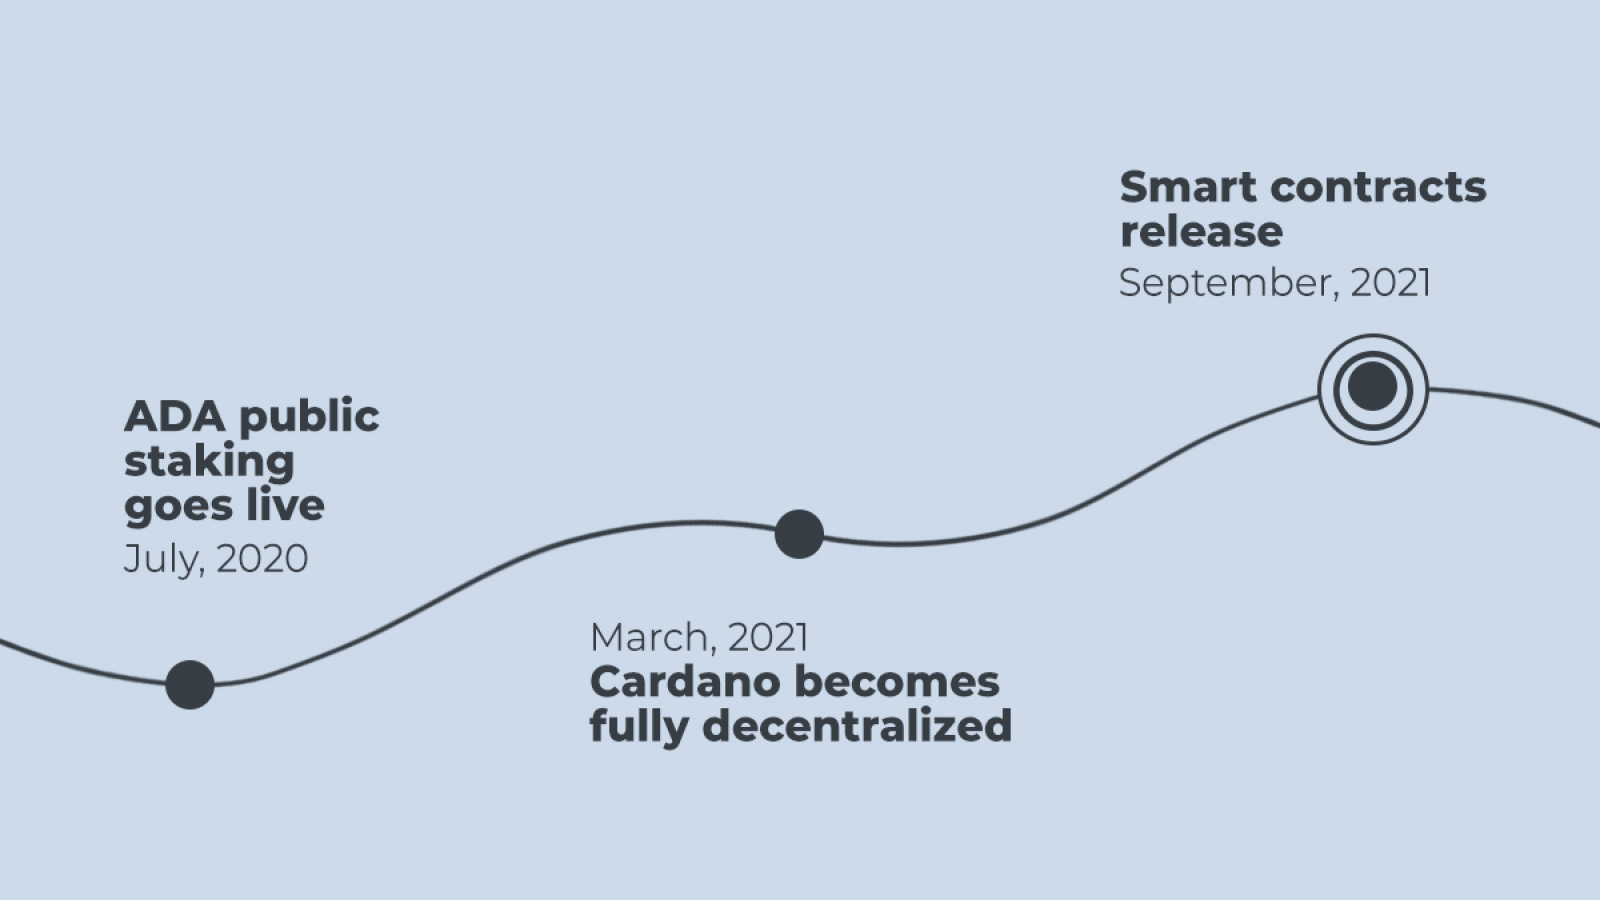 Cardano (ADA) accomplished crucial milestones in 2020-2021